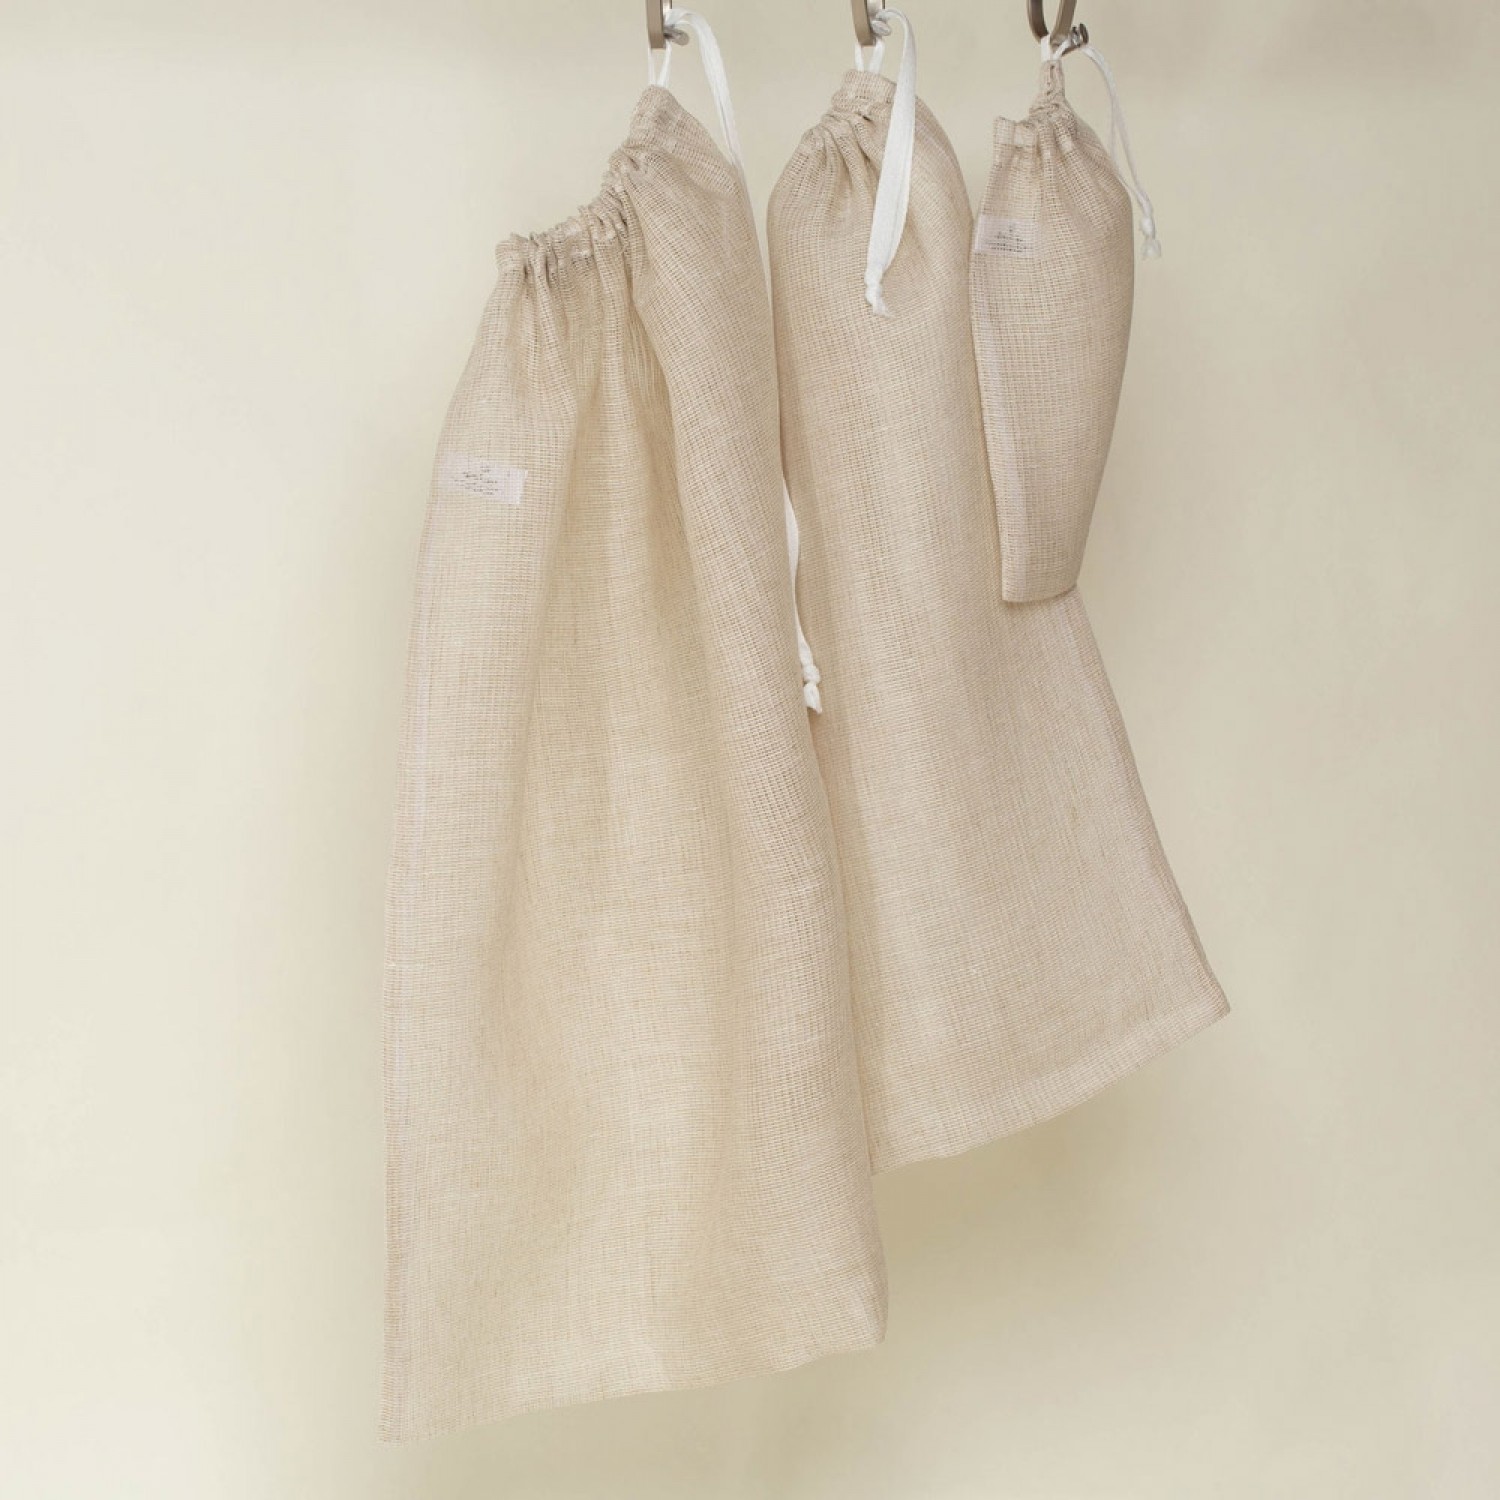 Organic Linen Mesh Laundry Bags - Set of 3 natural » nahtur-design